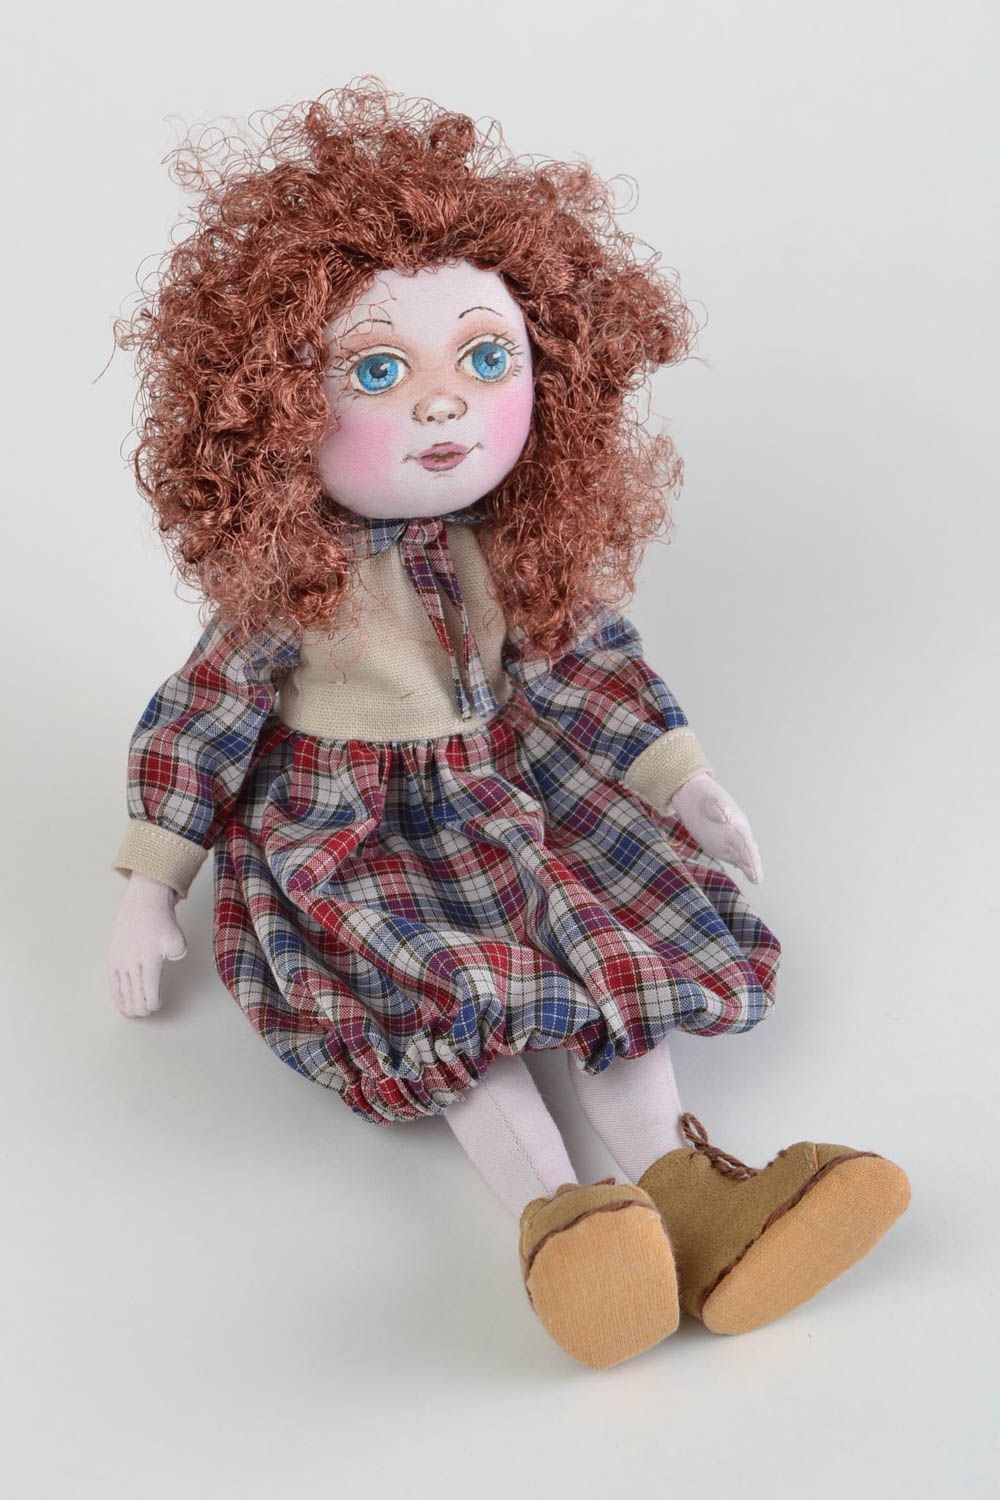 Interior decorative doll for children fabric soft handmade toy Yanochka photo 1